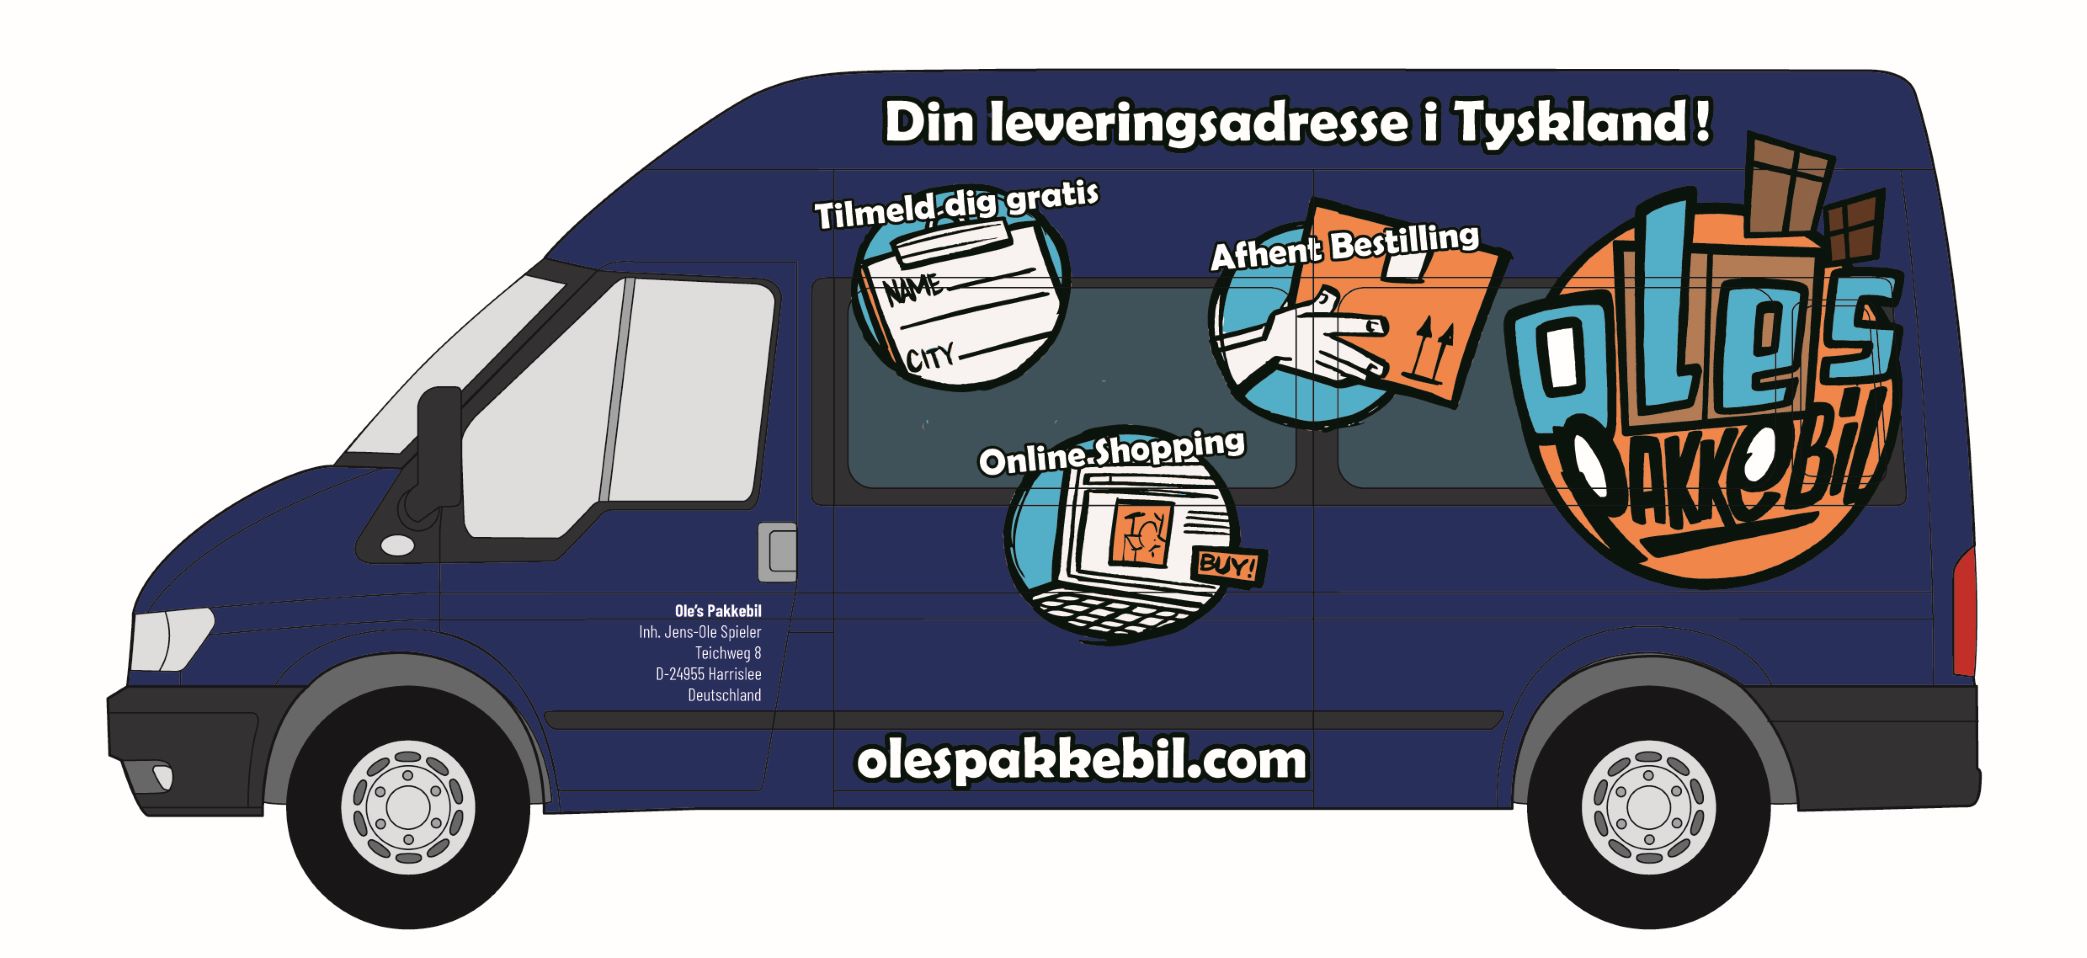 Oles Pakkebil – leveringsadresse i Tyskland